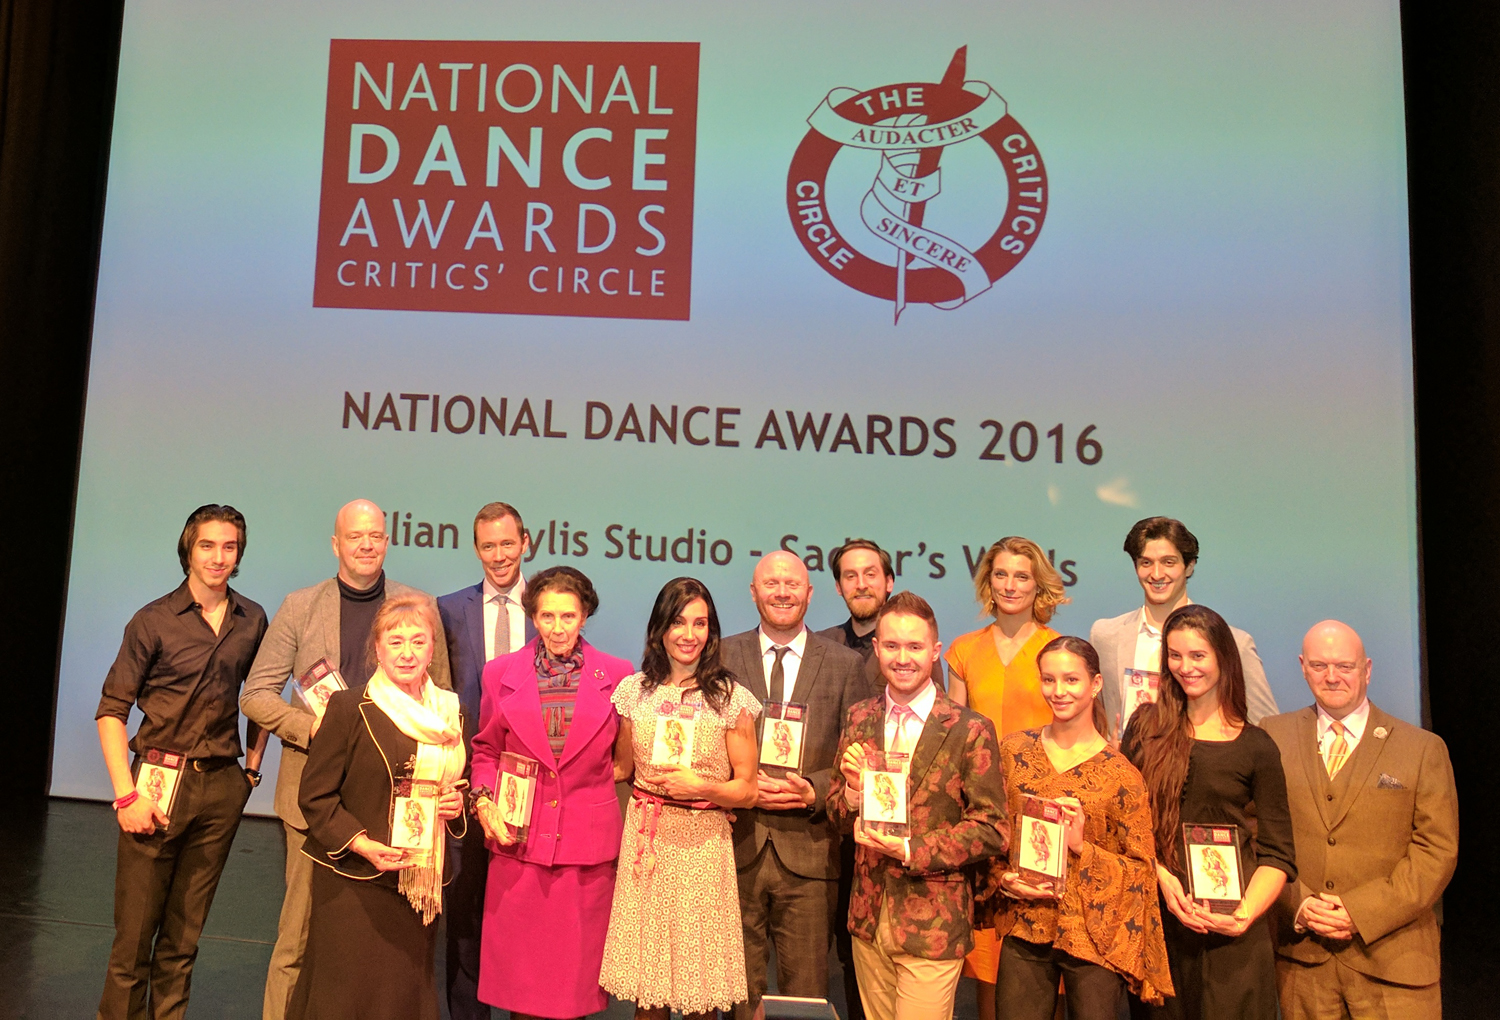 The National Dance Awards 2016 winners